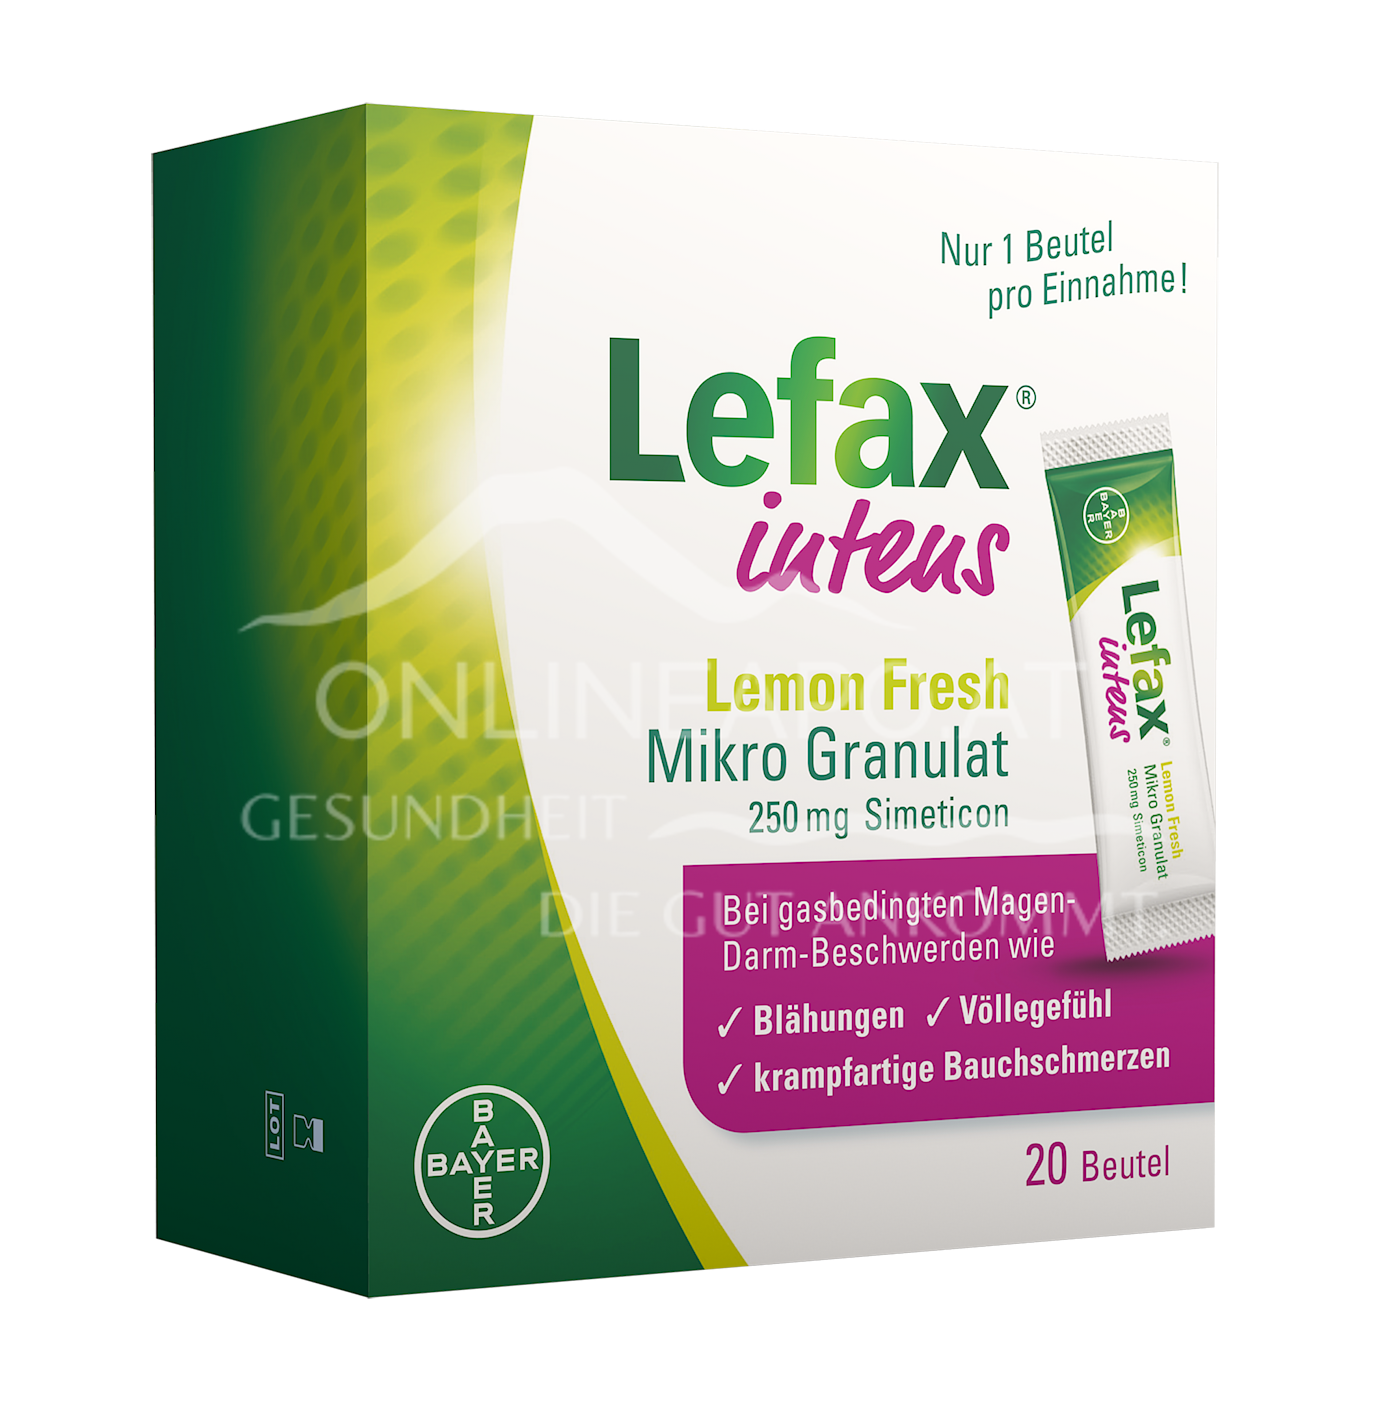 Lefax® intens Lemon Fresh Mikro Granulat